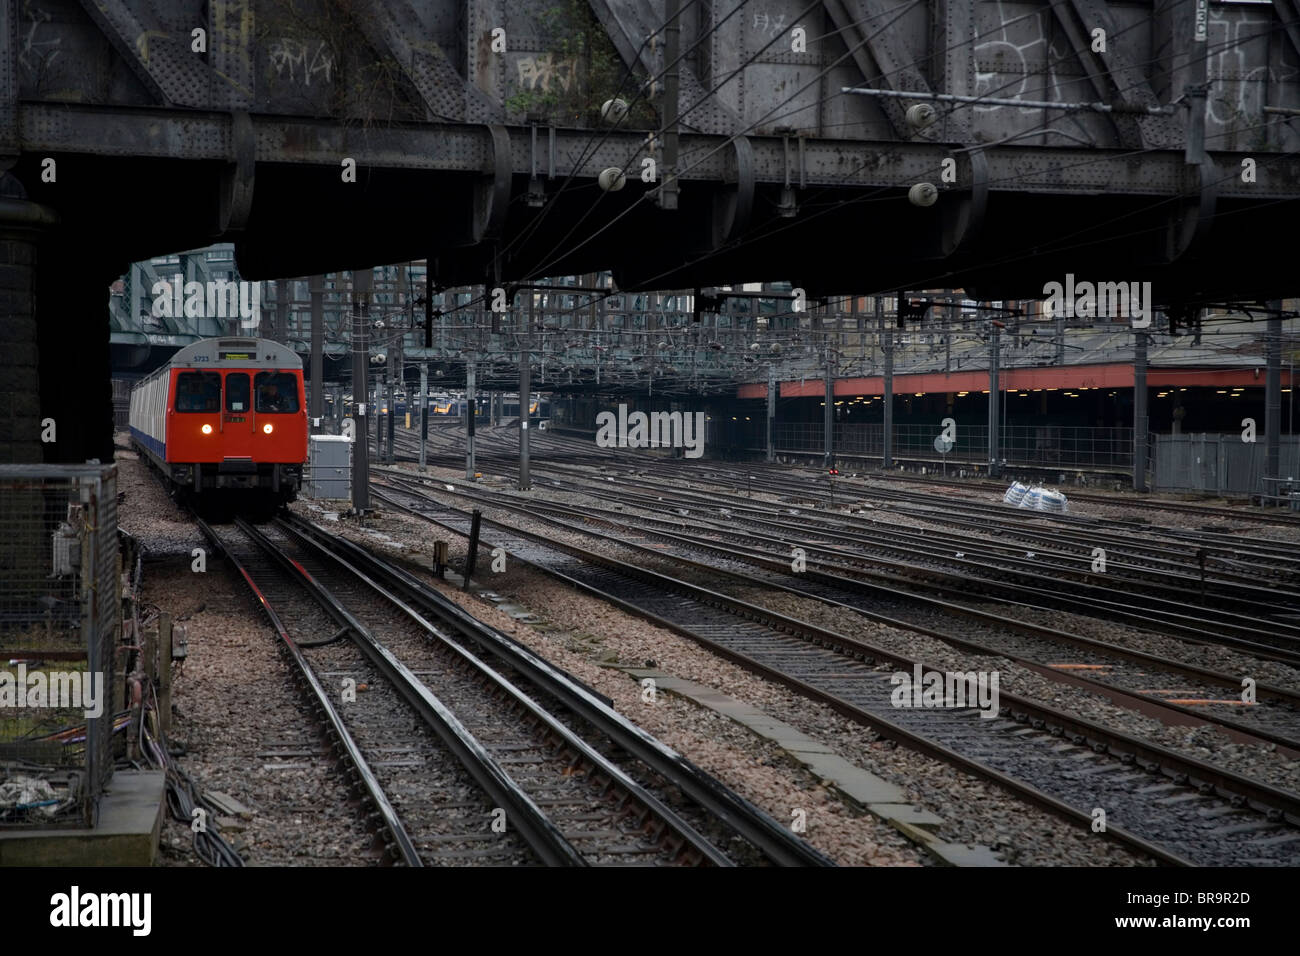 Tube train approaching Westbourne Park Station on tracks under bridge Stock Photo